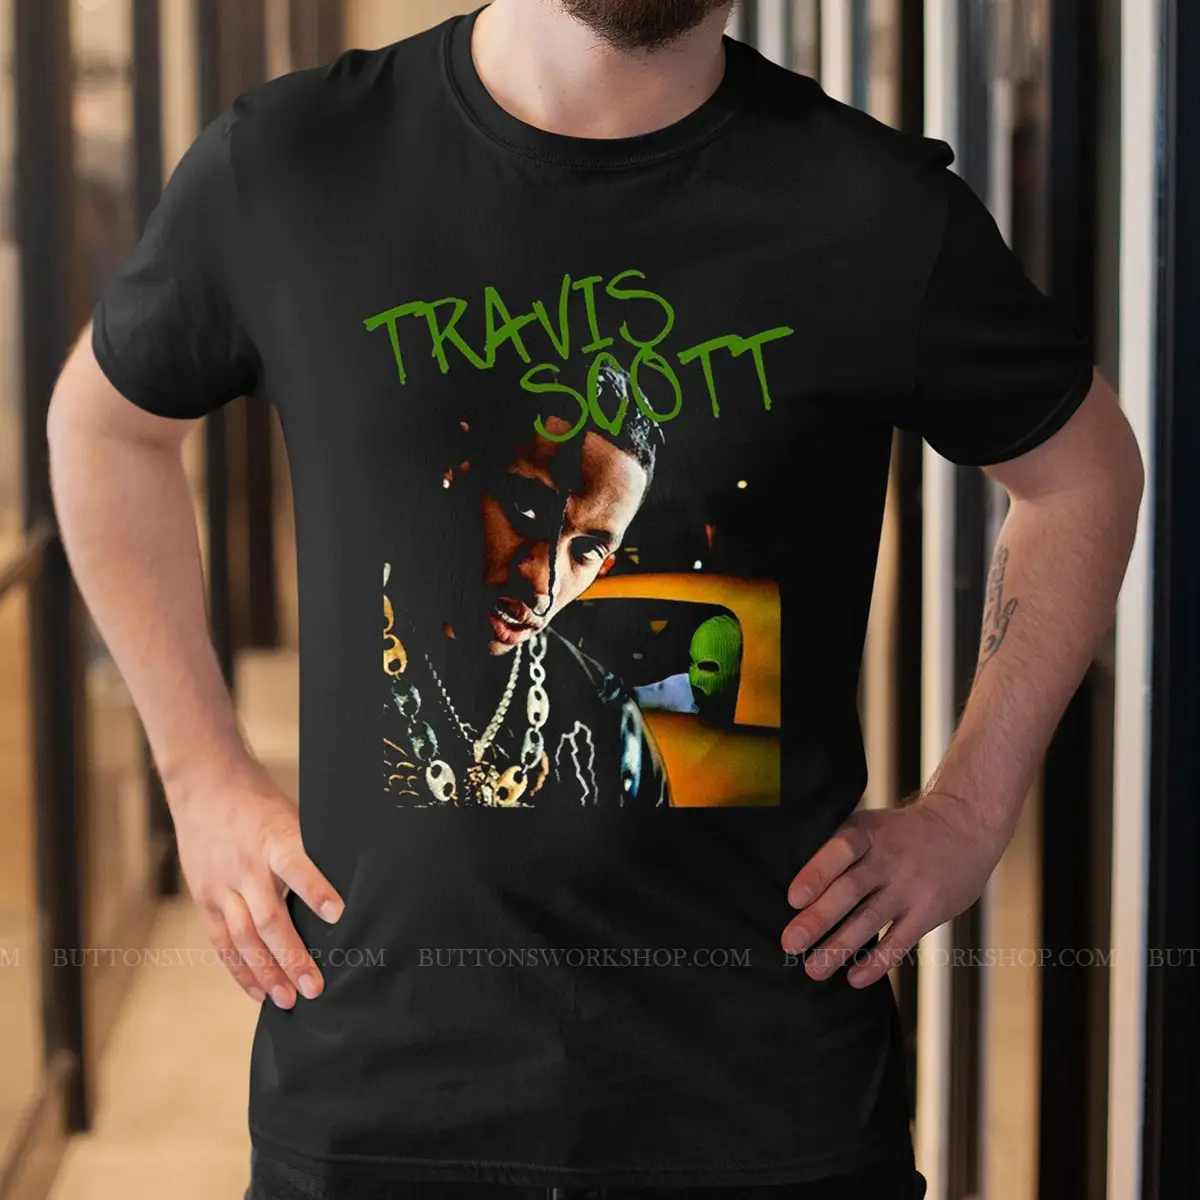 Travis Scott Vintage Shirt Unisex Tshirt